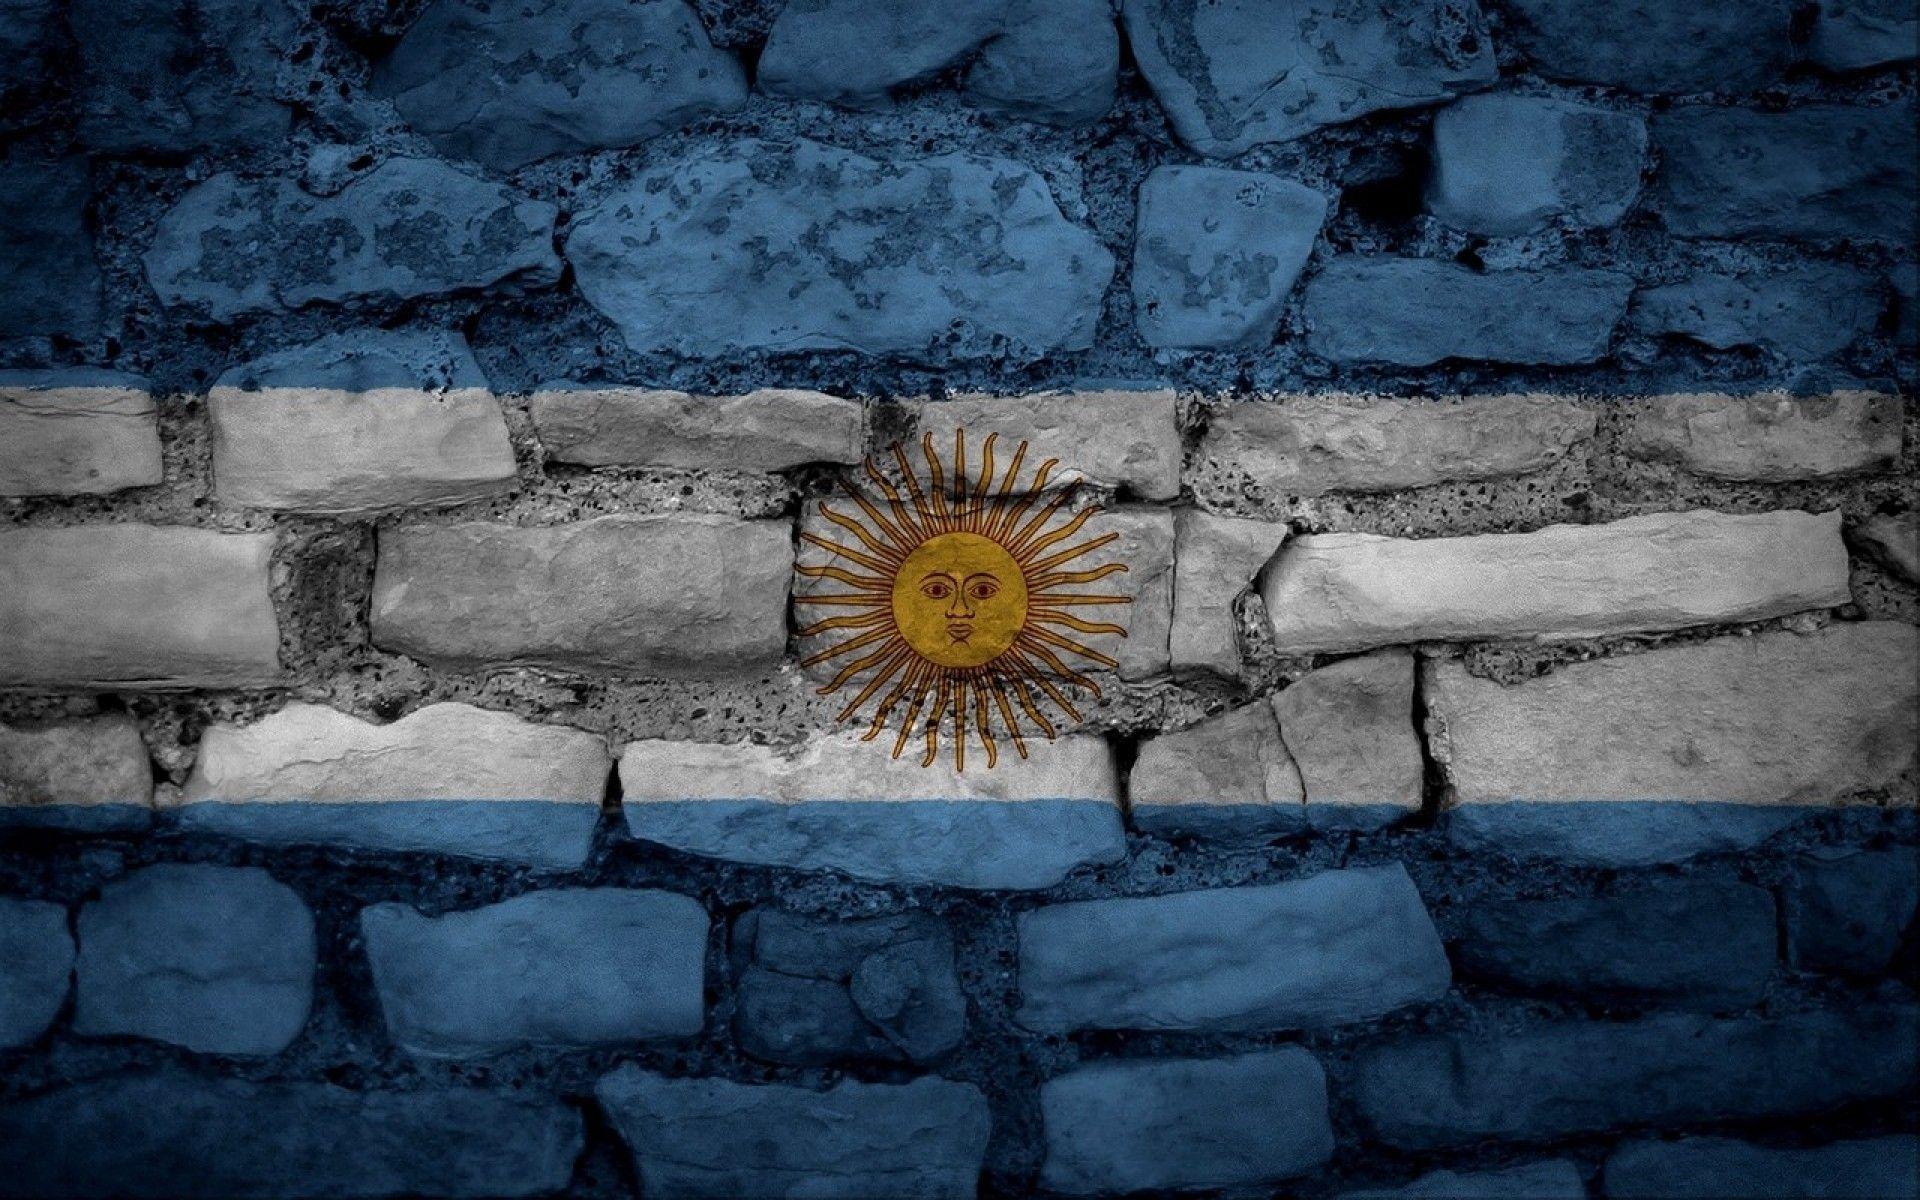 Fondos Bandera Argentina